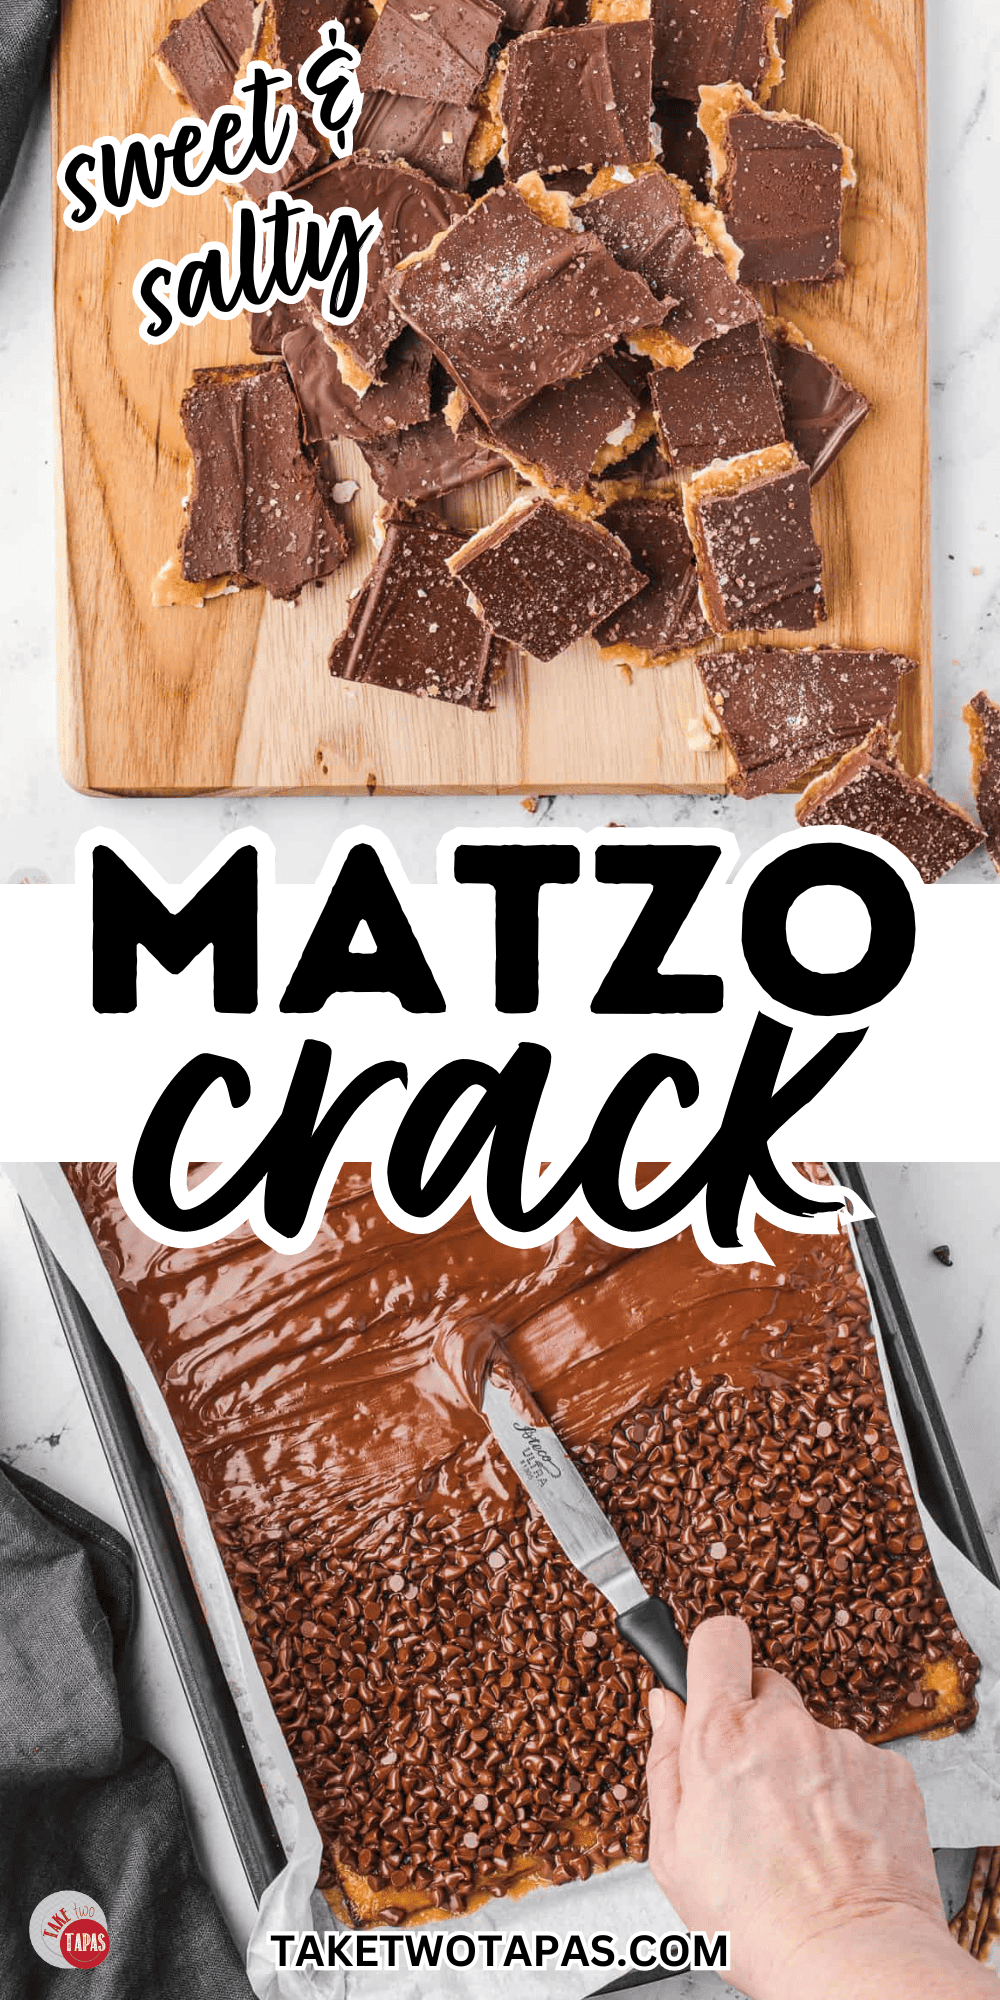 pile of matzo brittle with text "matzo crack"